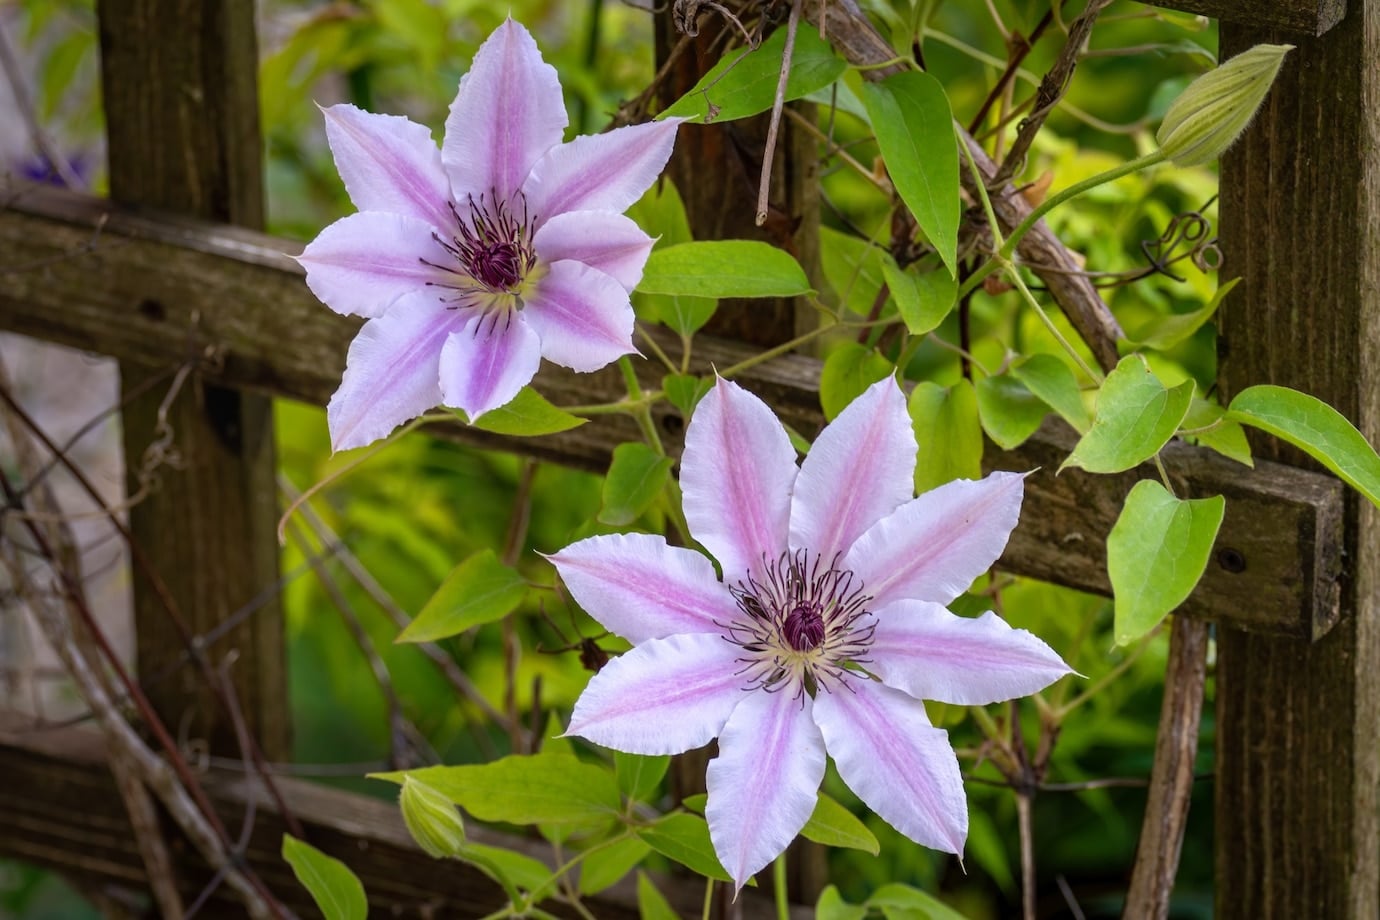 Purple Clematis in full bloom